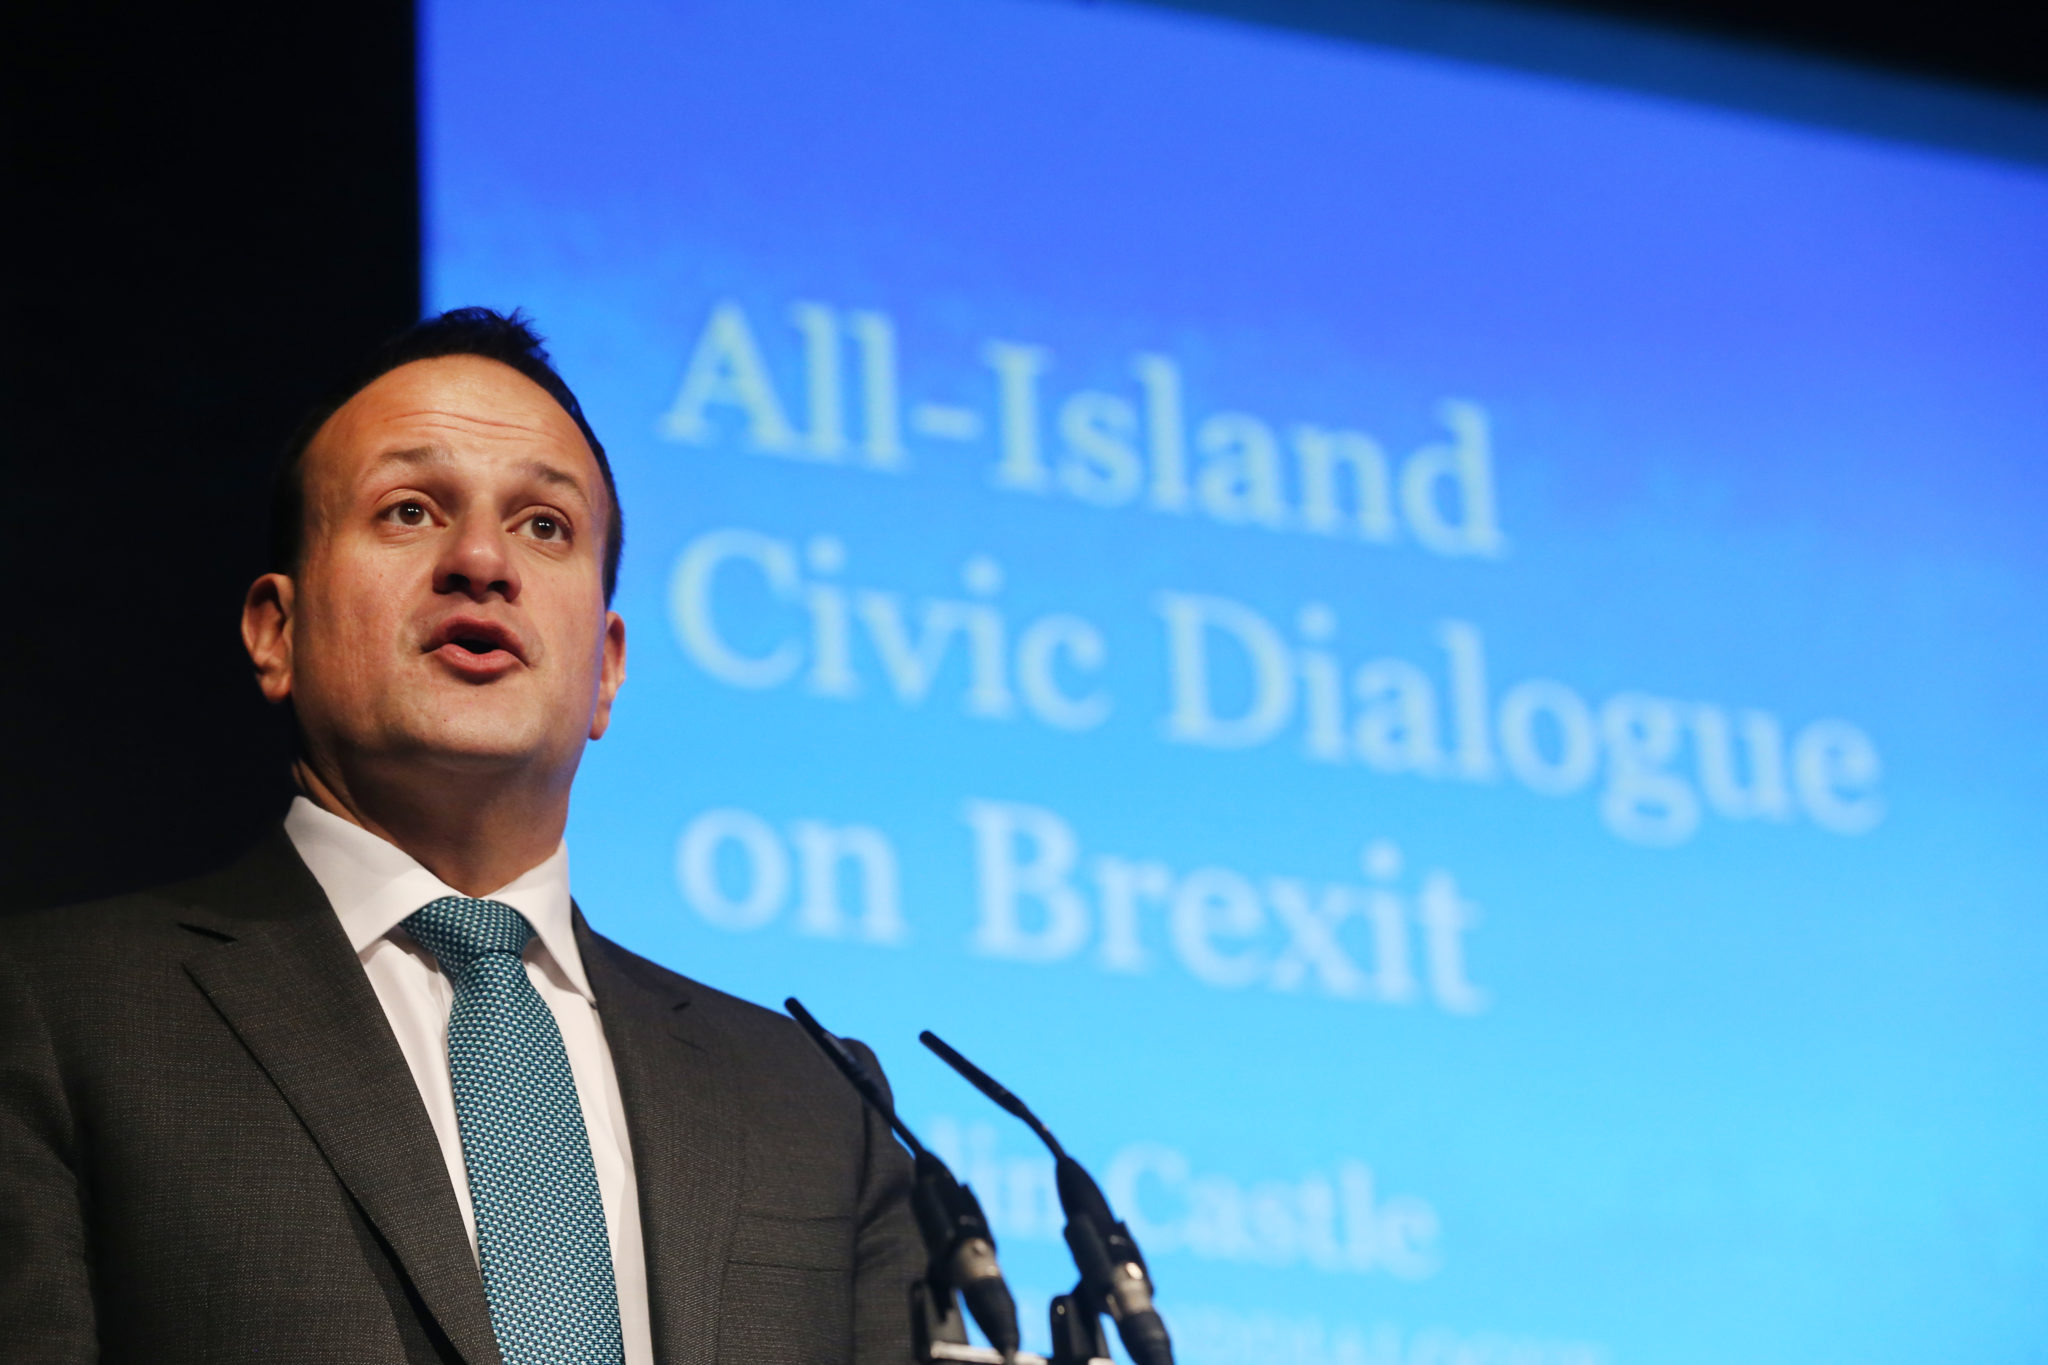 Leo Varadkar at the All-Island Civic Dialogue on Brexit